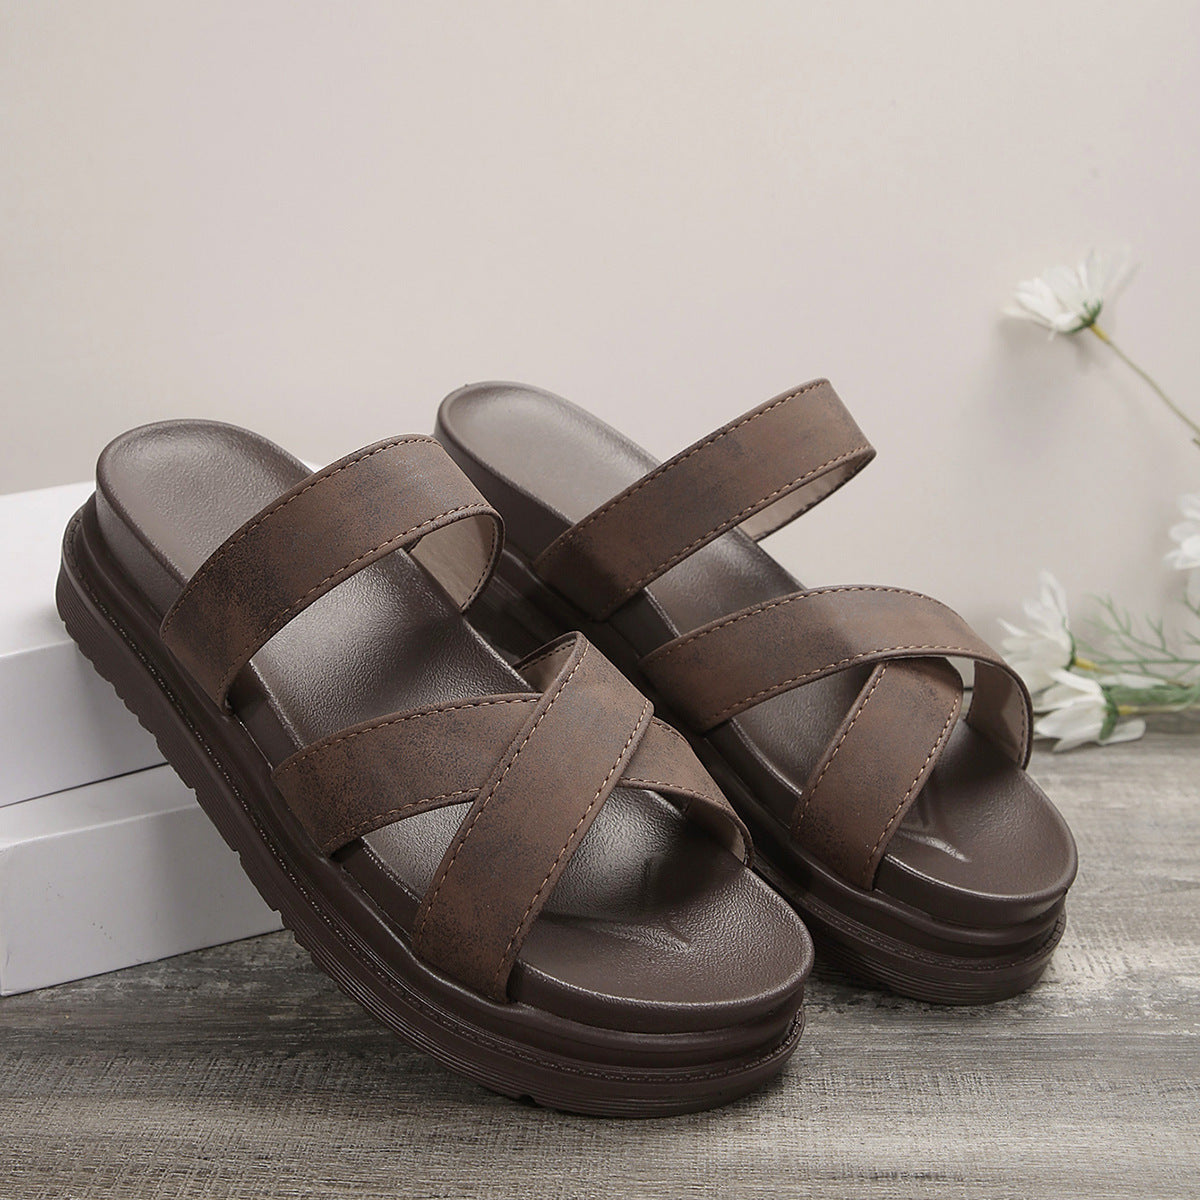 Platform Slippers Women's Cross Sandals